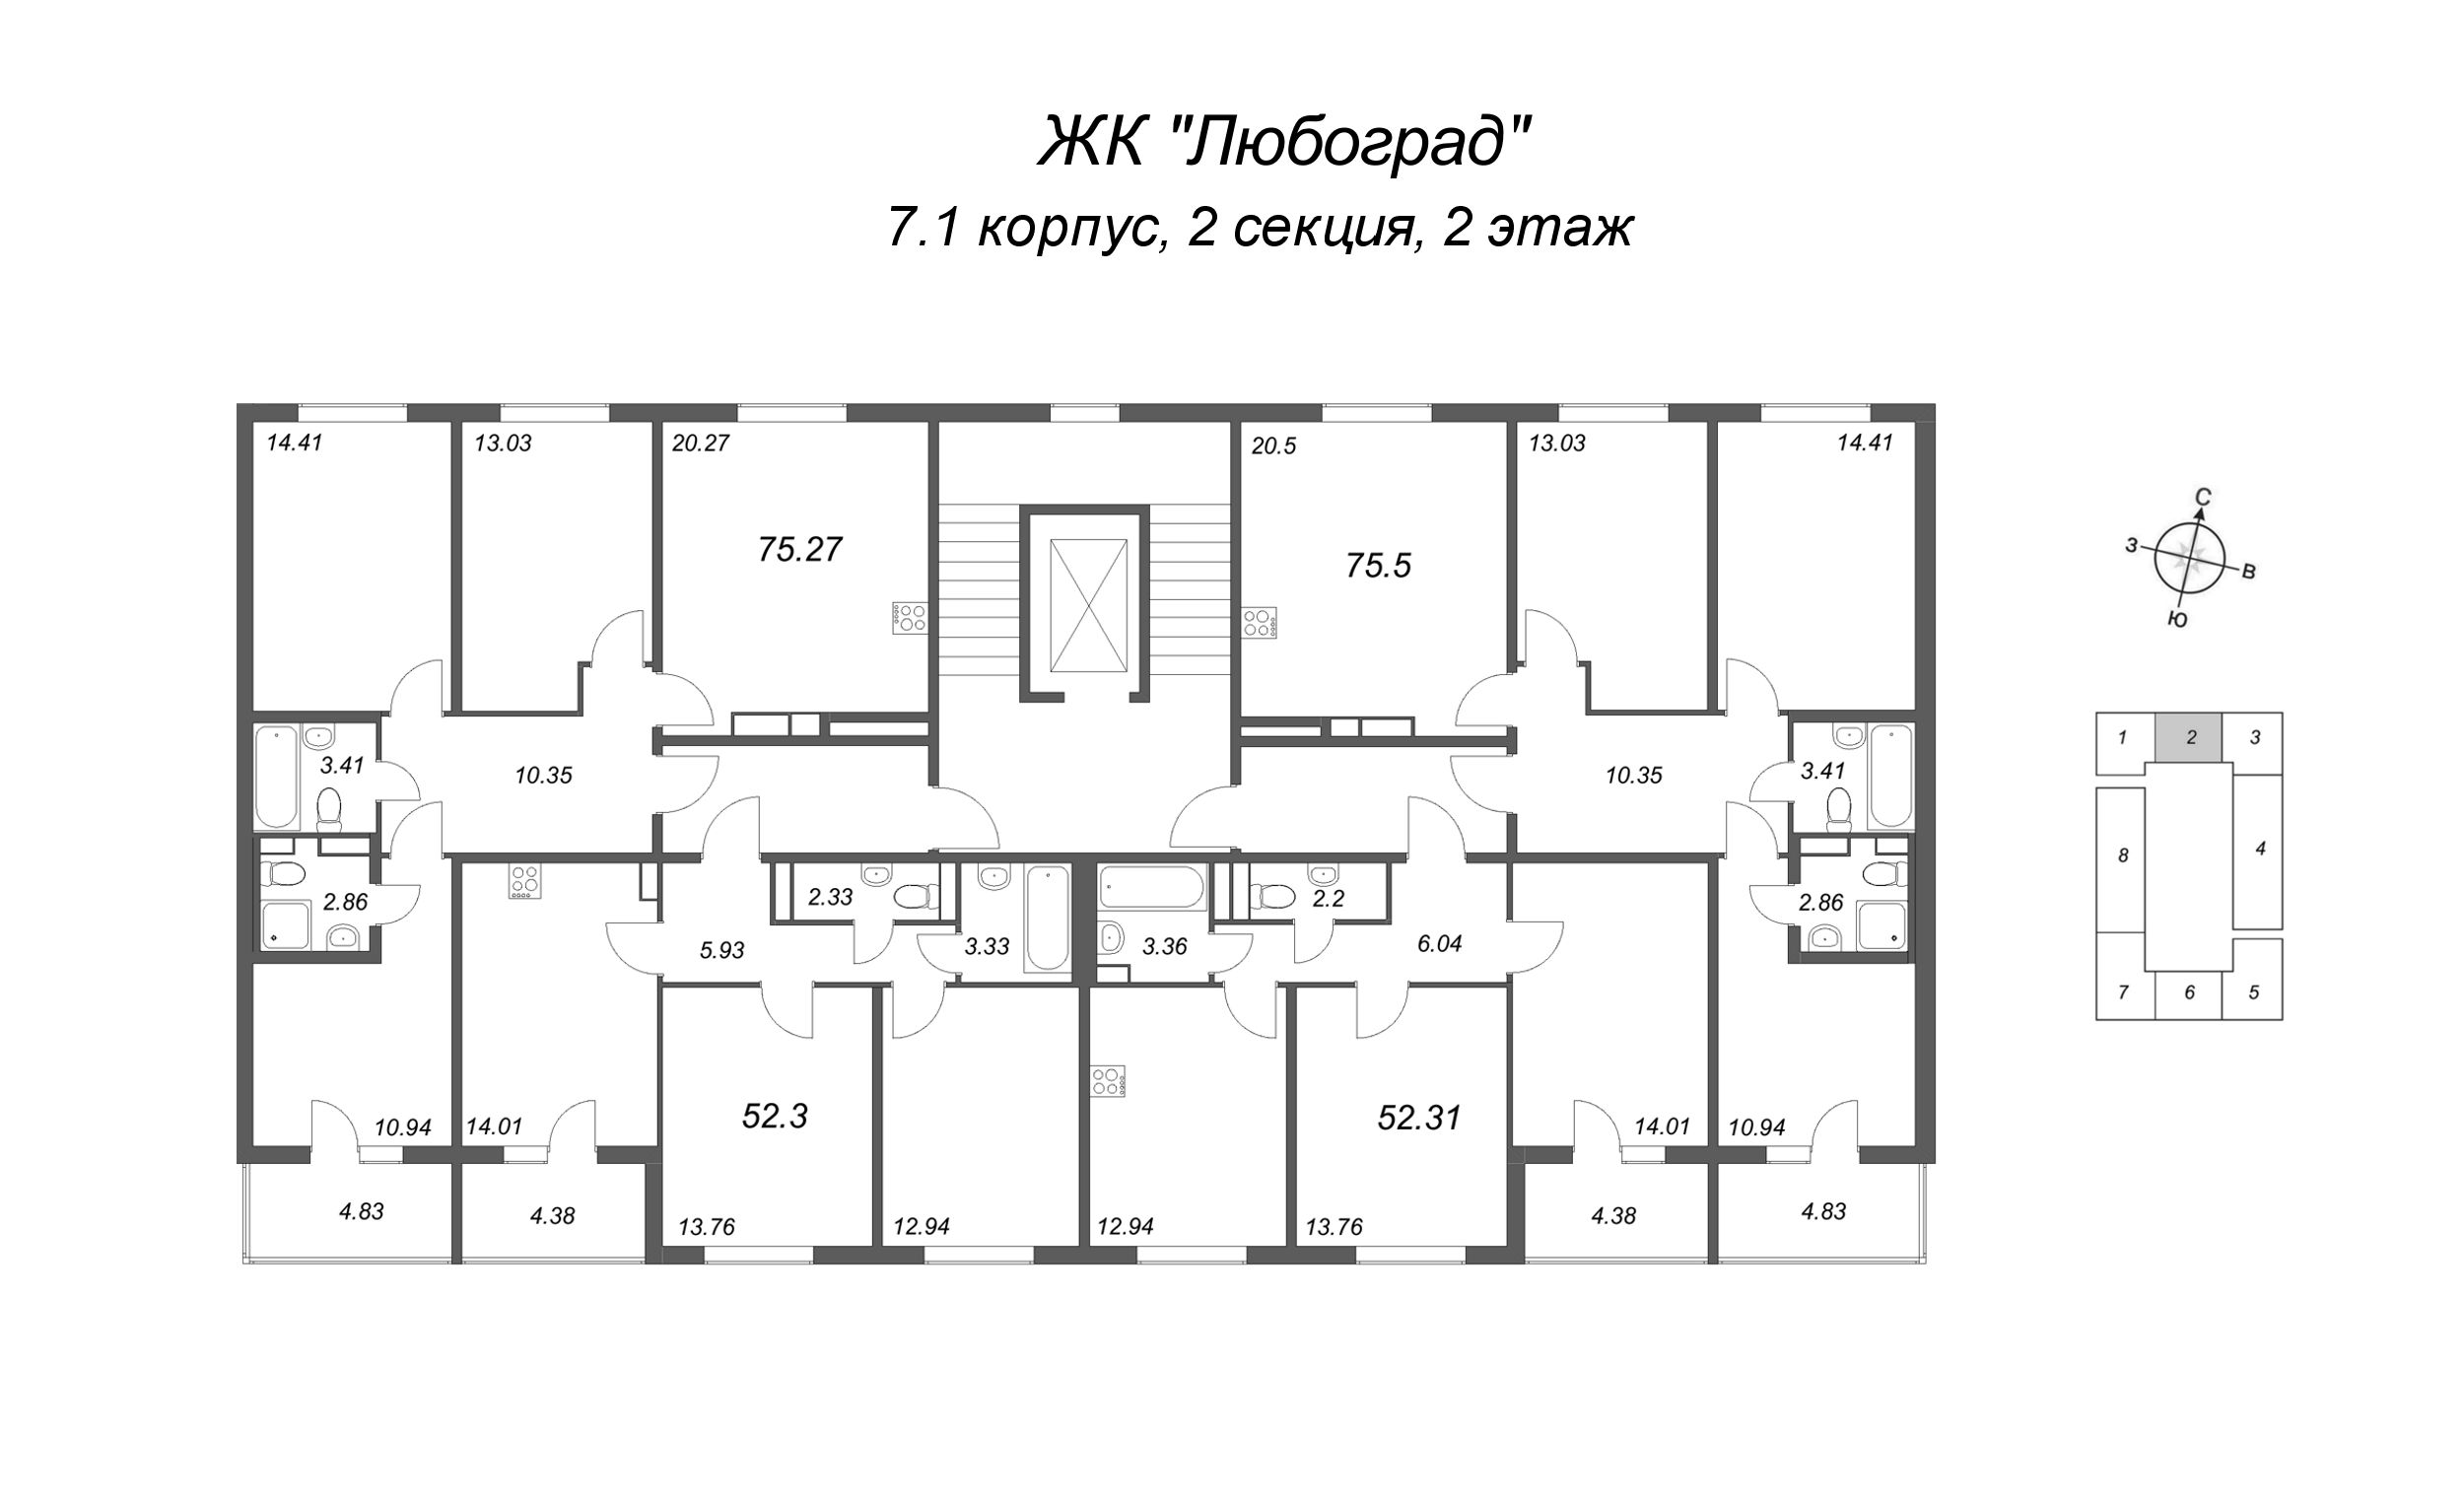 4-комнатная (Евро) квартира, 75.5 м² - планировка этажа